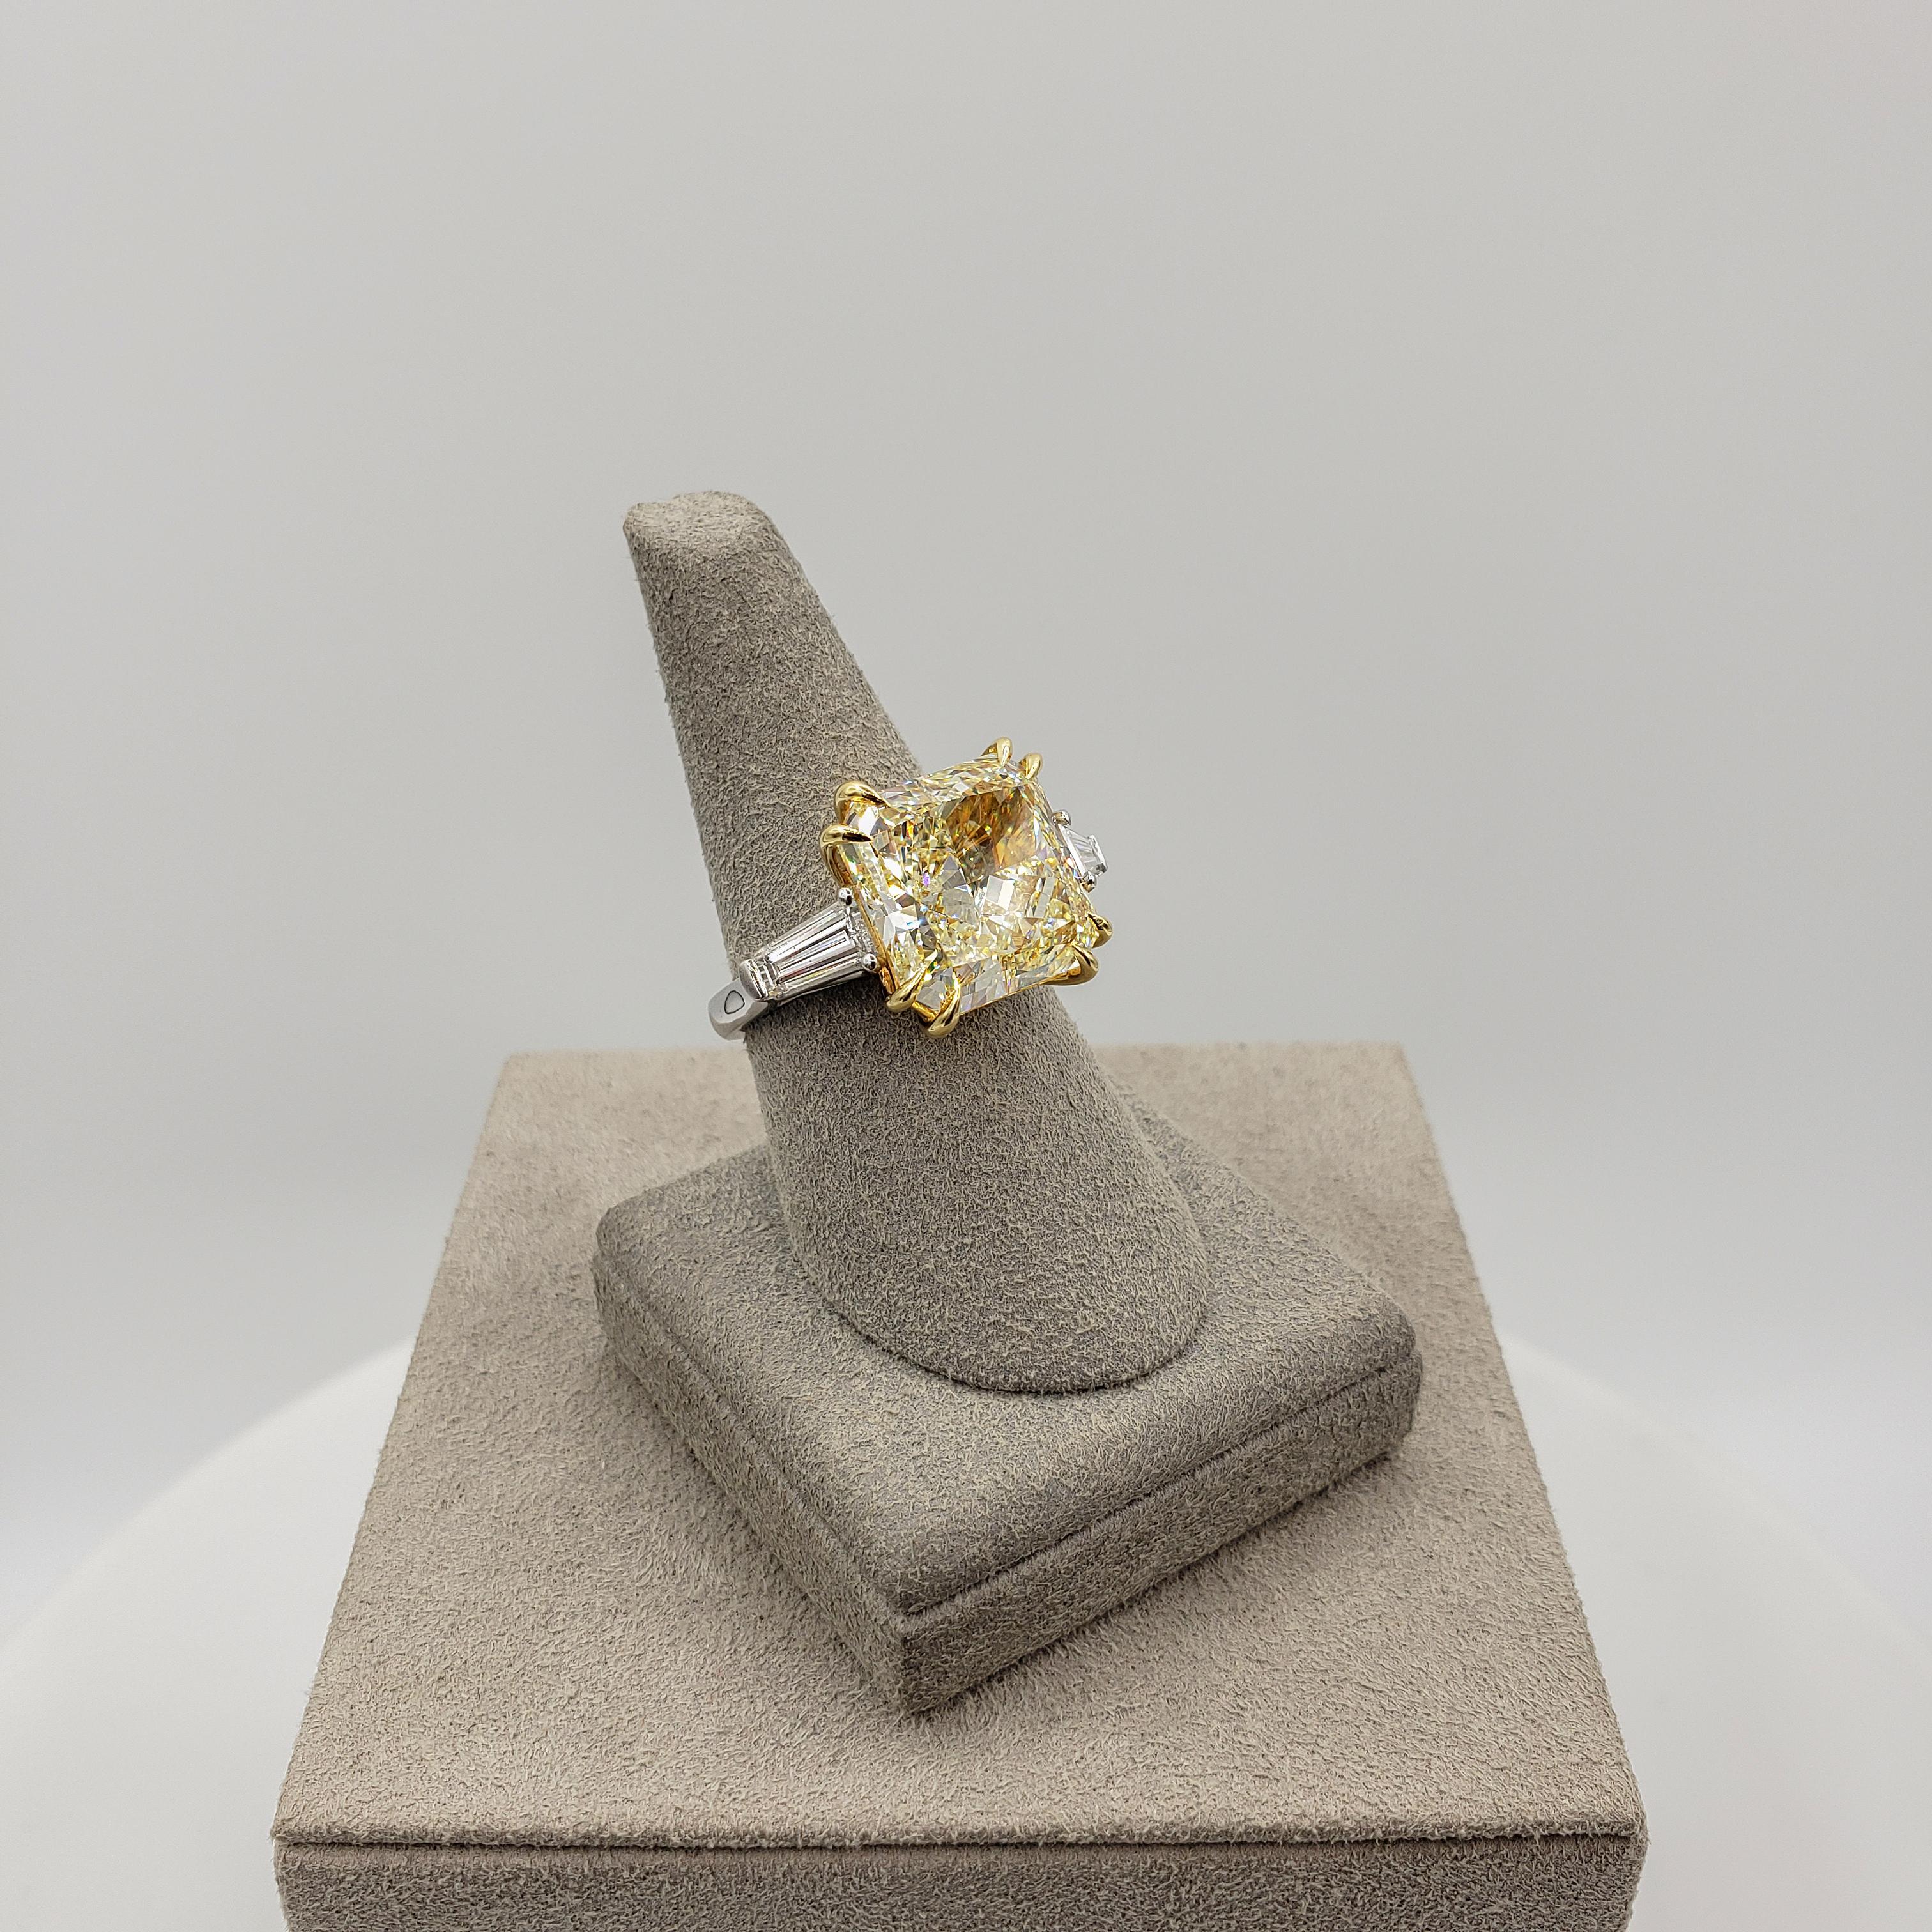 10 carat yellow diamond ring